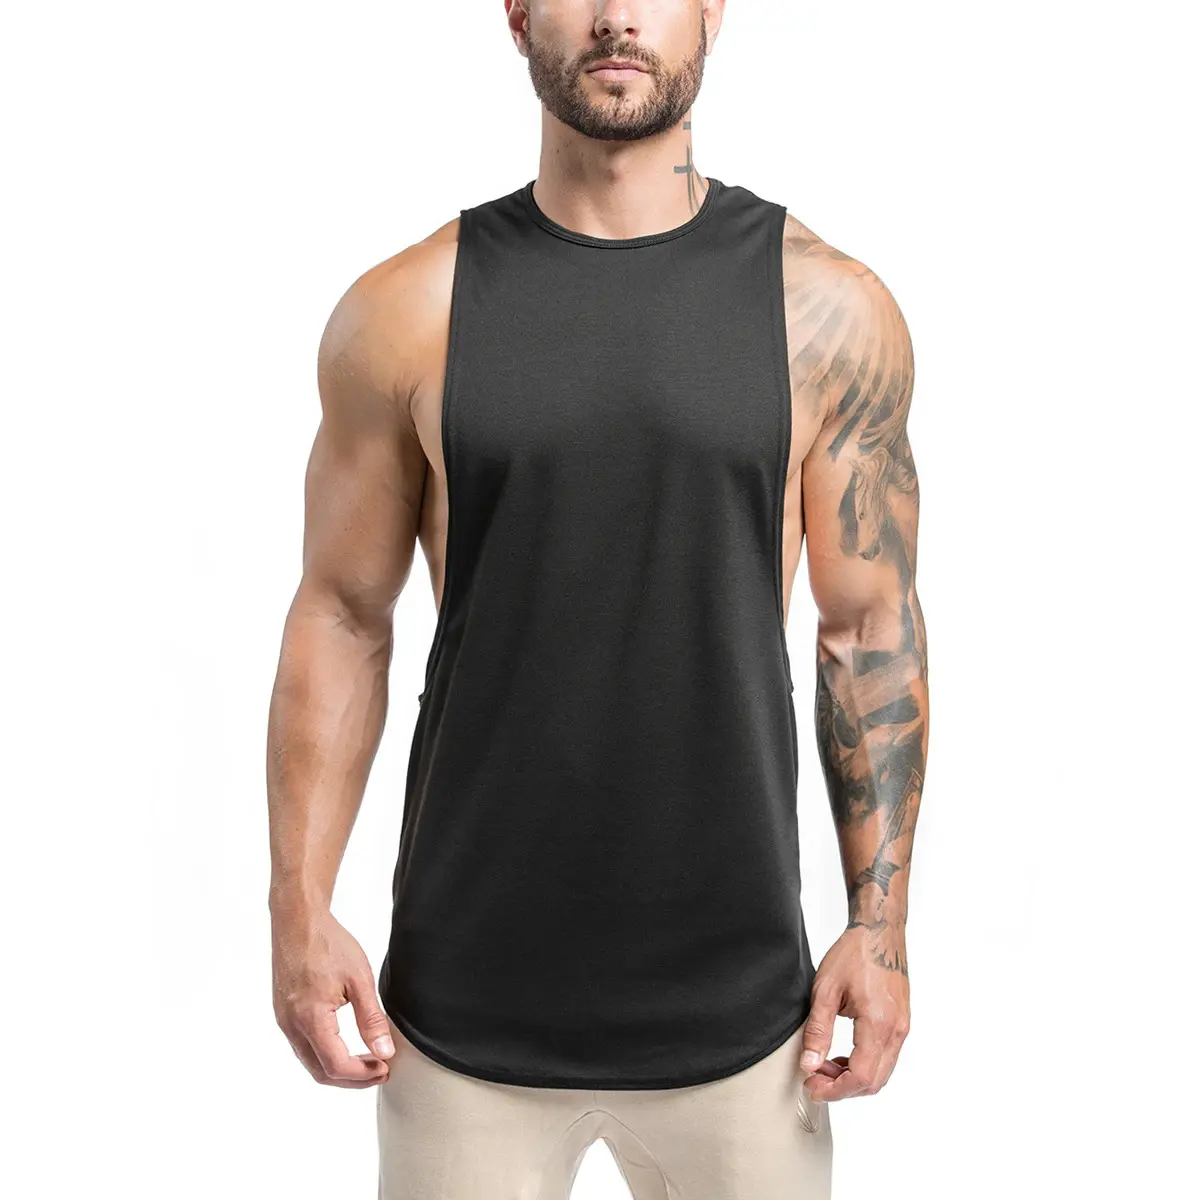 Workout Gym Tank Top Mens Muscle Sleeveless Sportswear Shirt